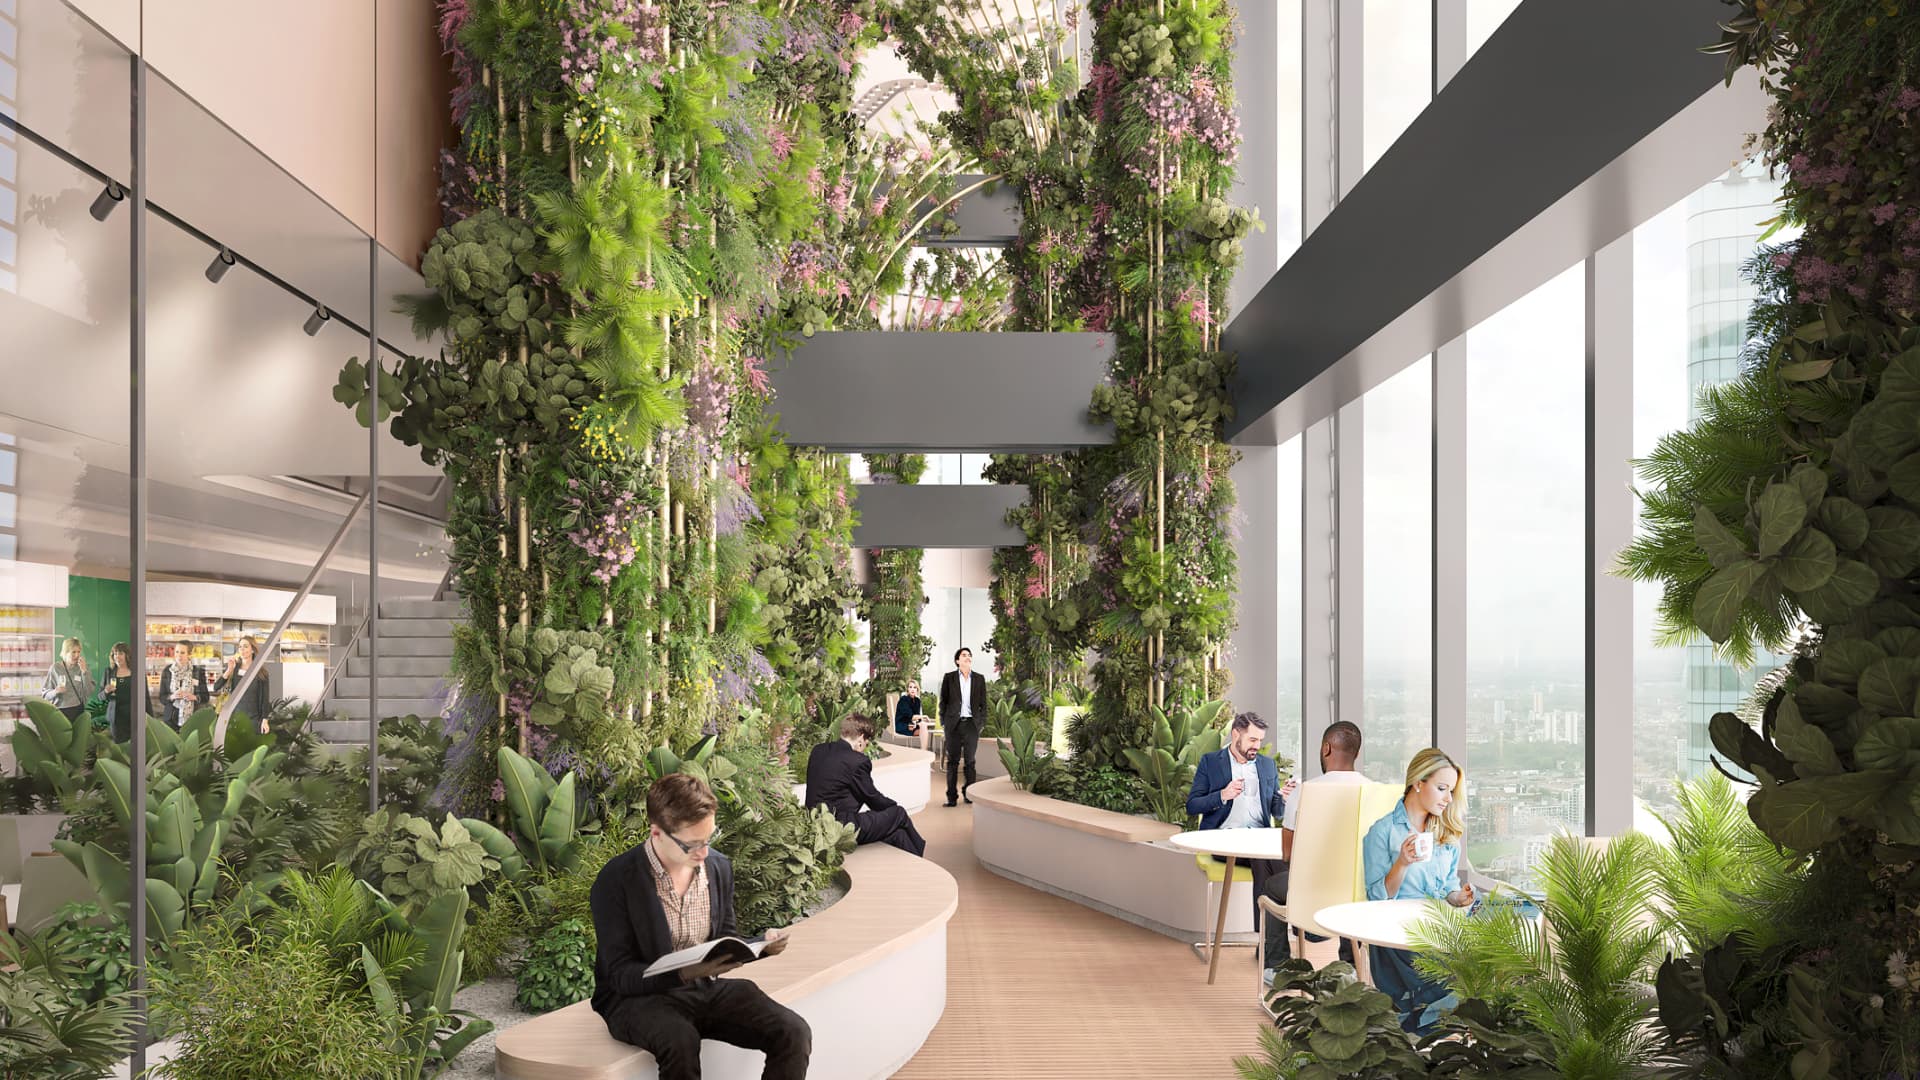 Conceptual image of common workspace in Citi's new Citi Tower London headquarters.